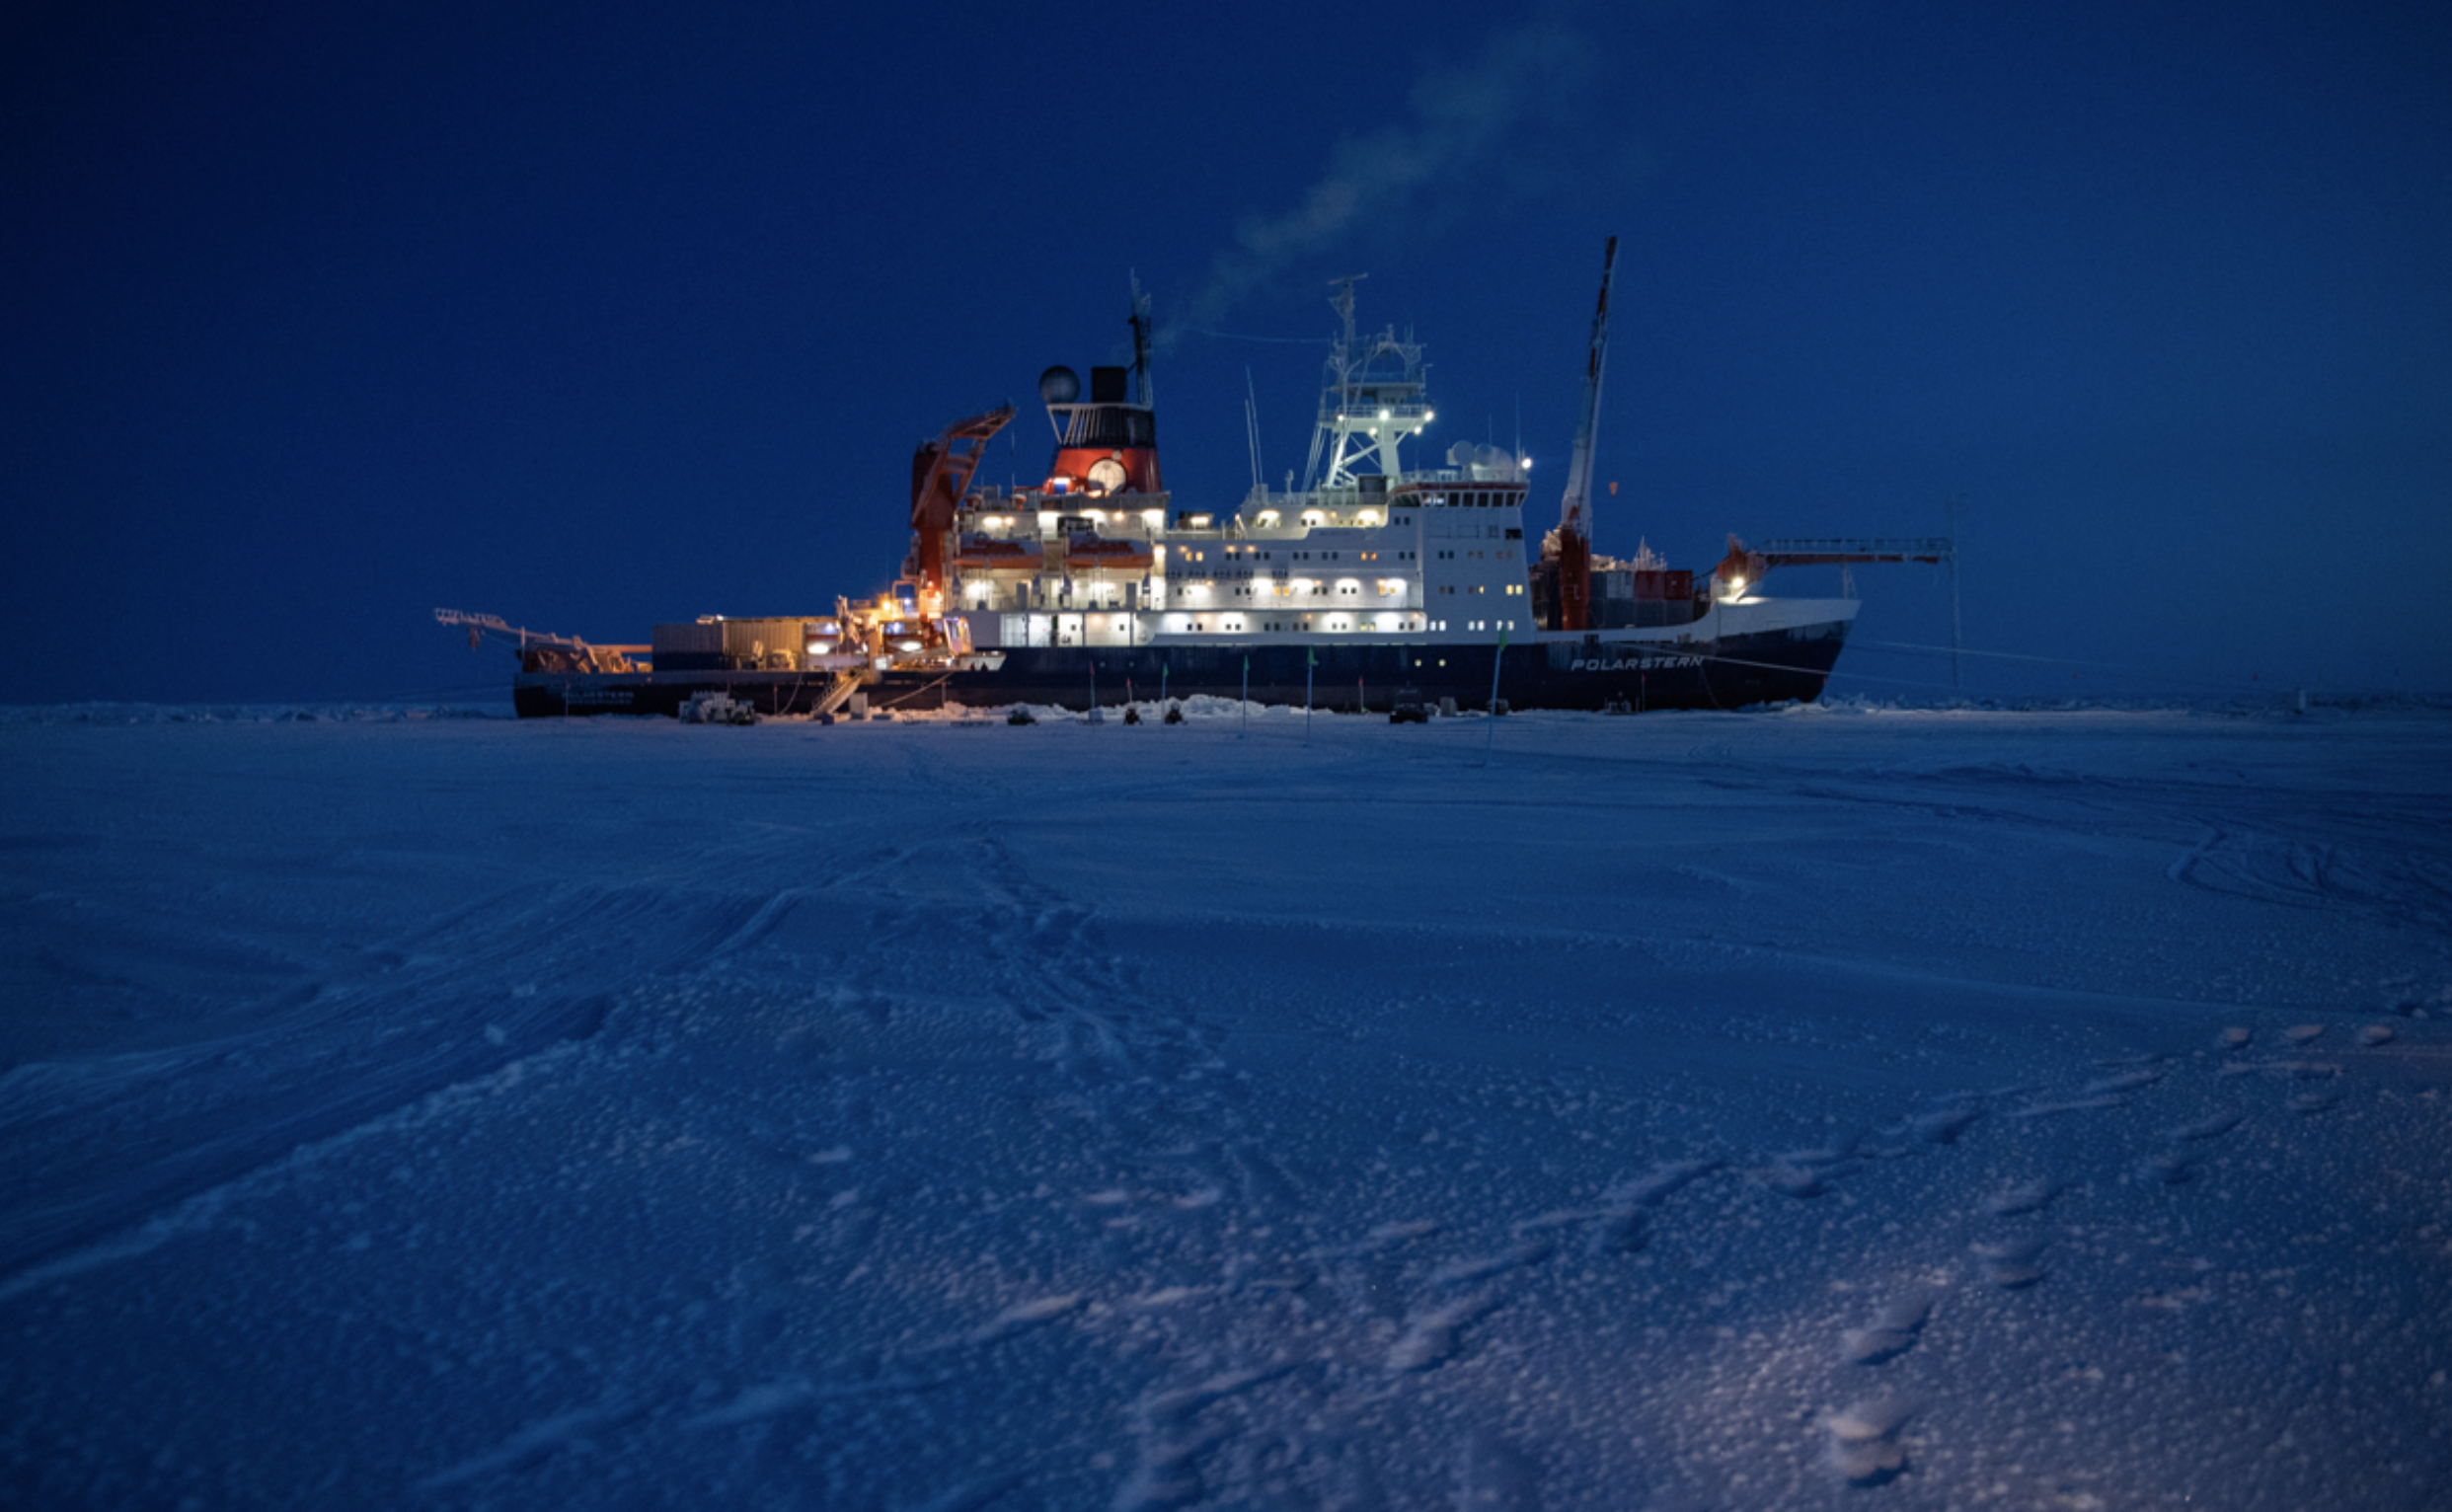 The Polarstern locked in sea ice during the polar night